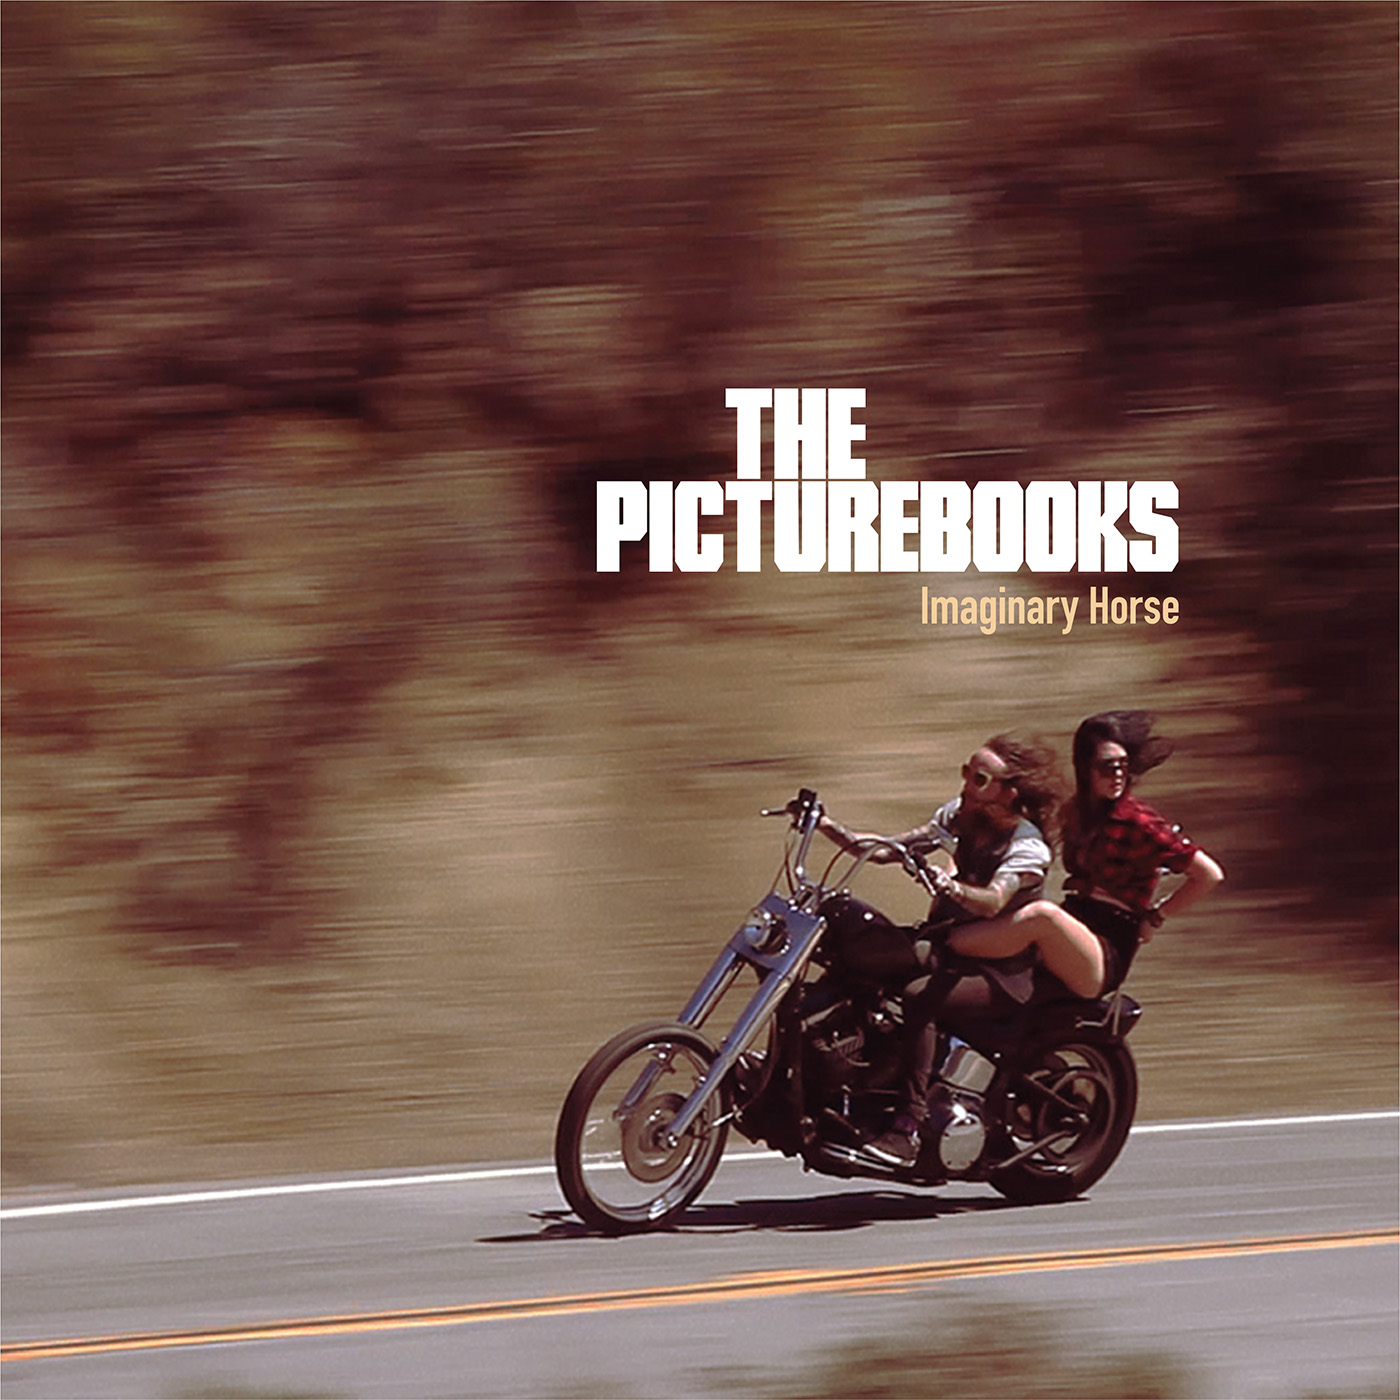 The Picturebooks, Imaginary Horse, Noisolution, 2014, Album Cover